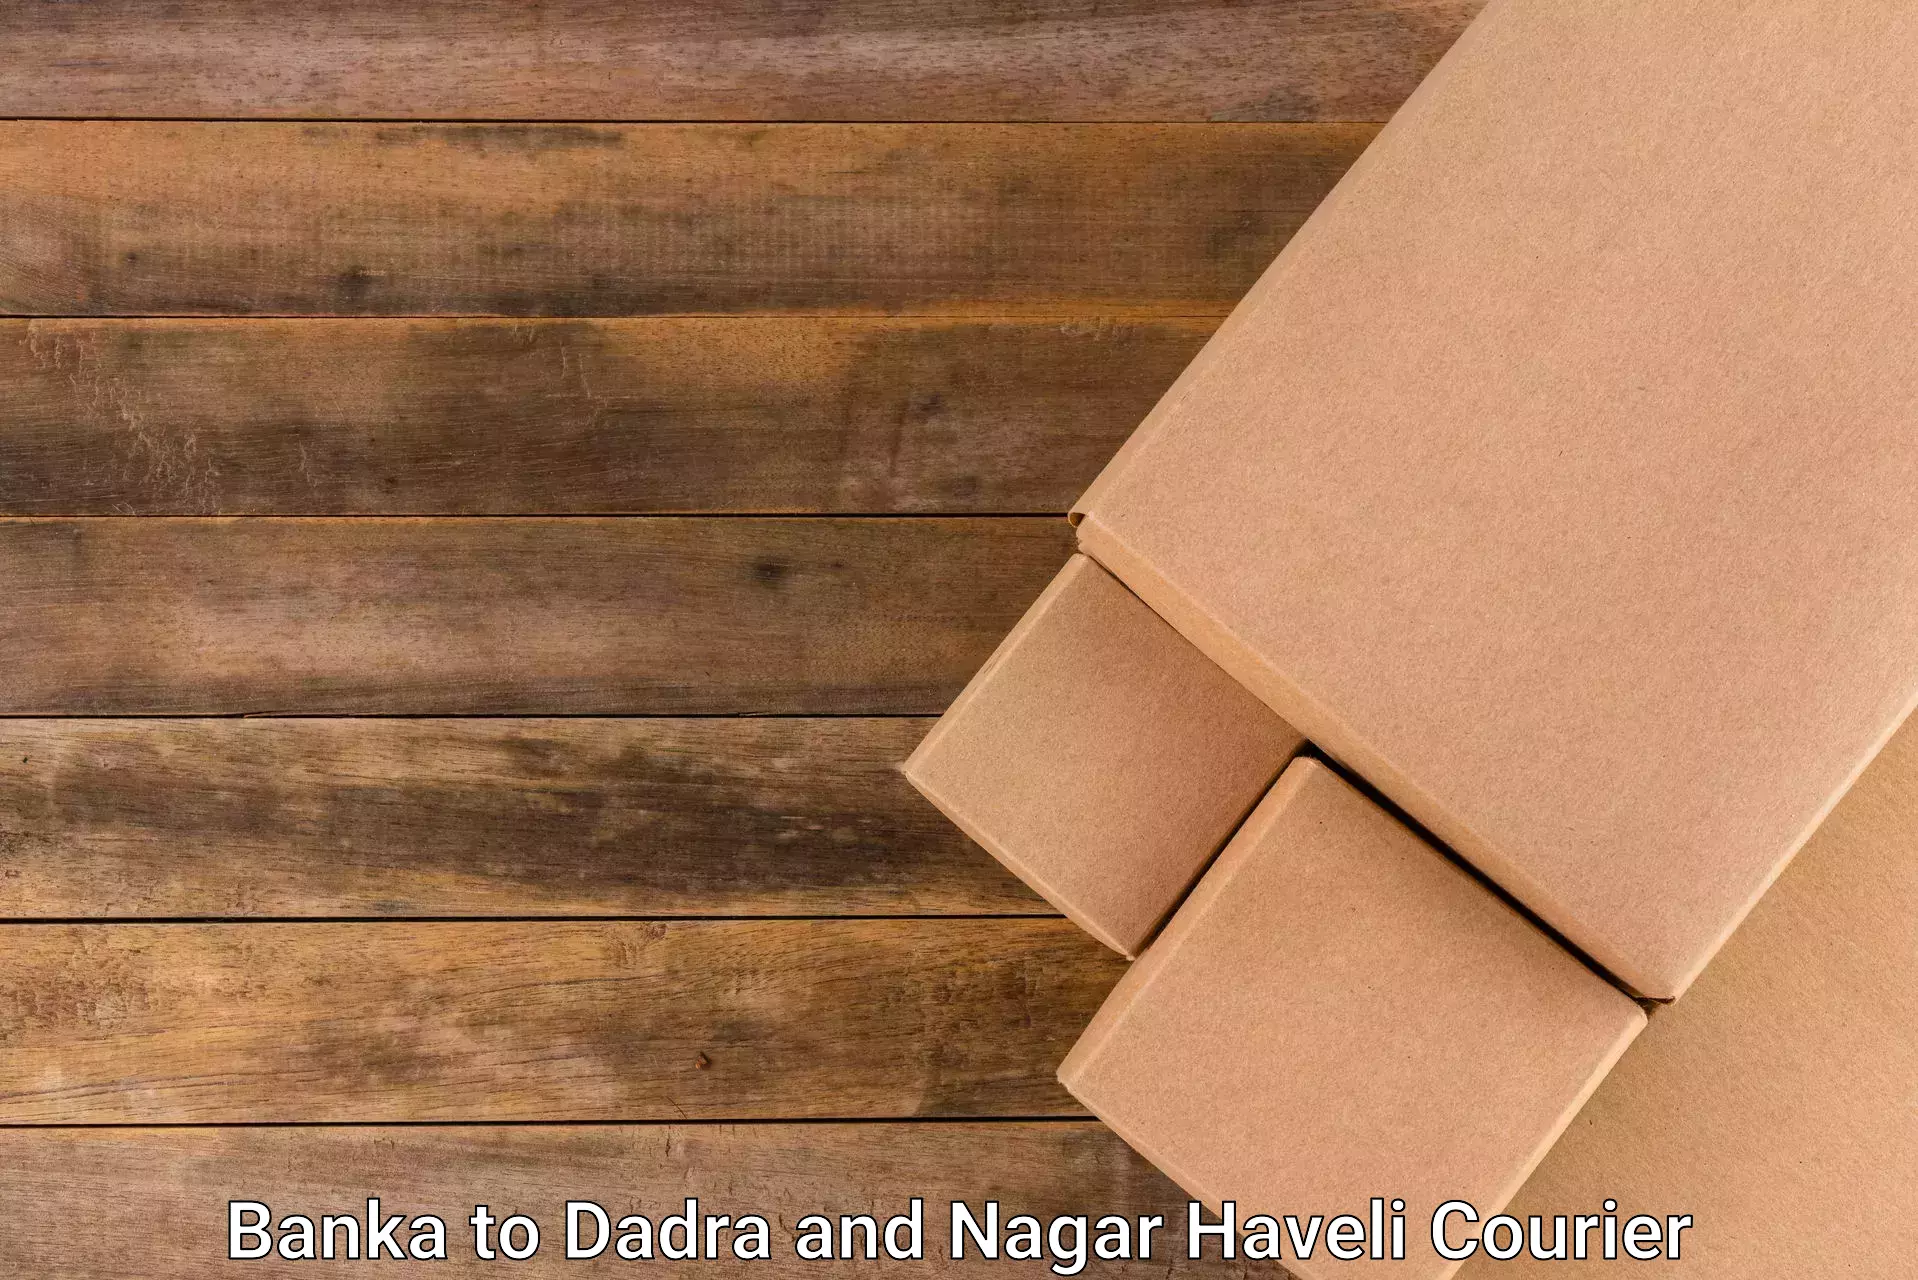 24/7 courier service Banka to Dadra and Nagar Haveli